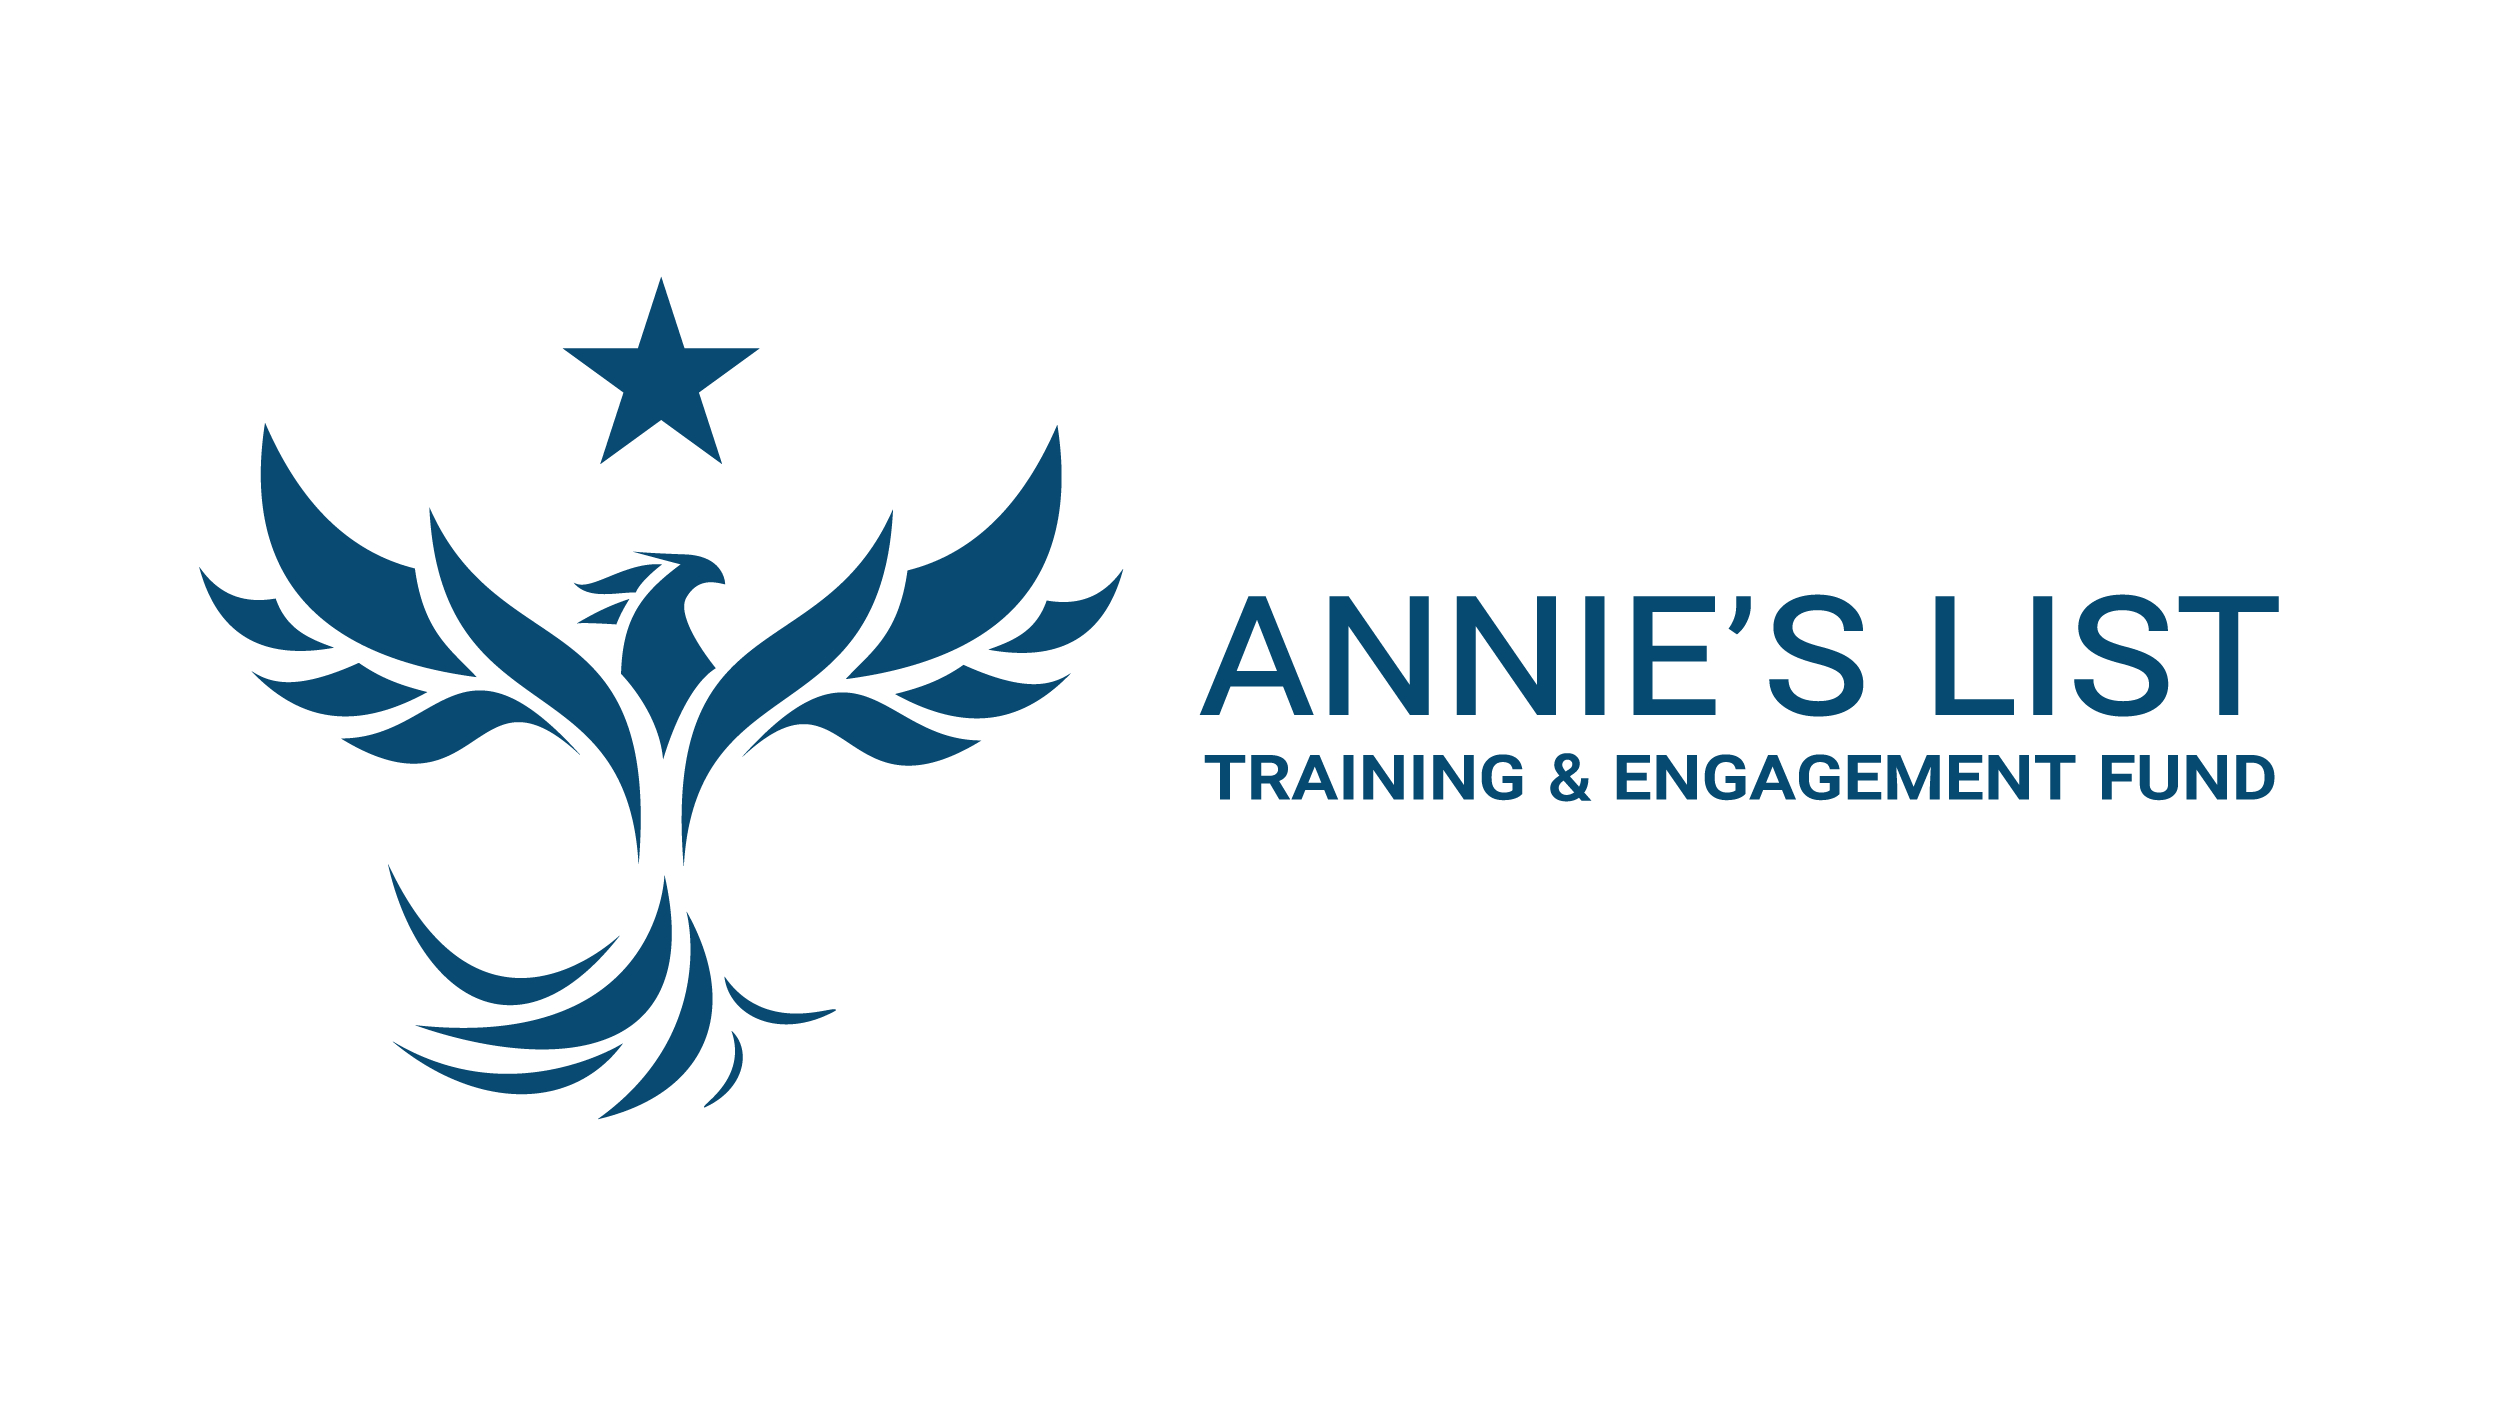 Annie's List Training and Engagement Fund logo